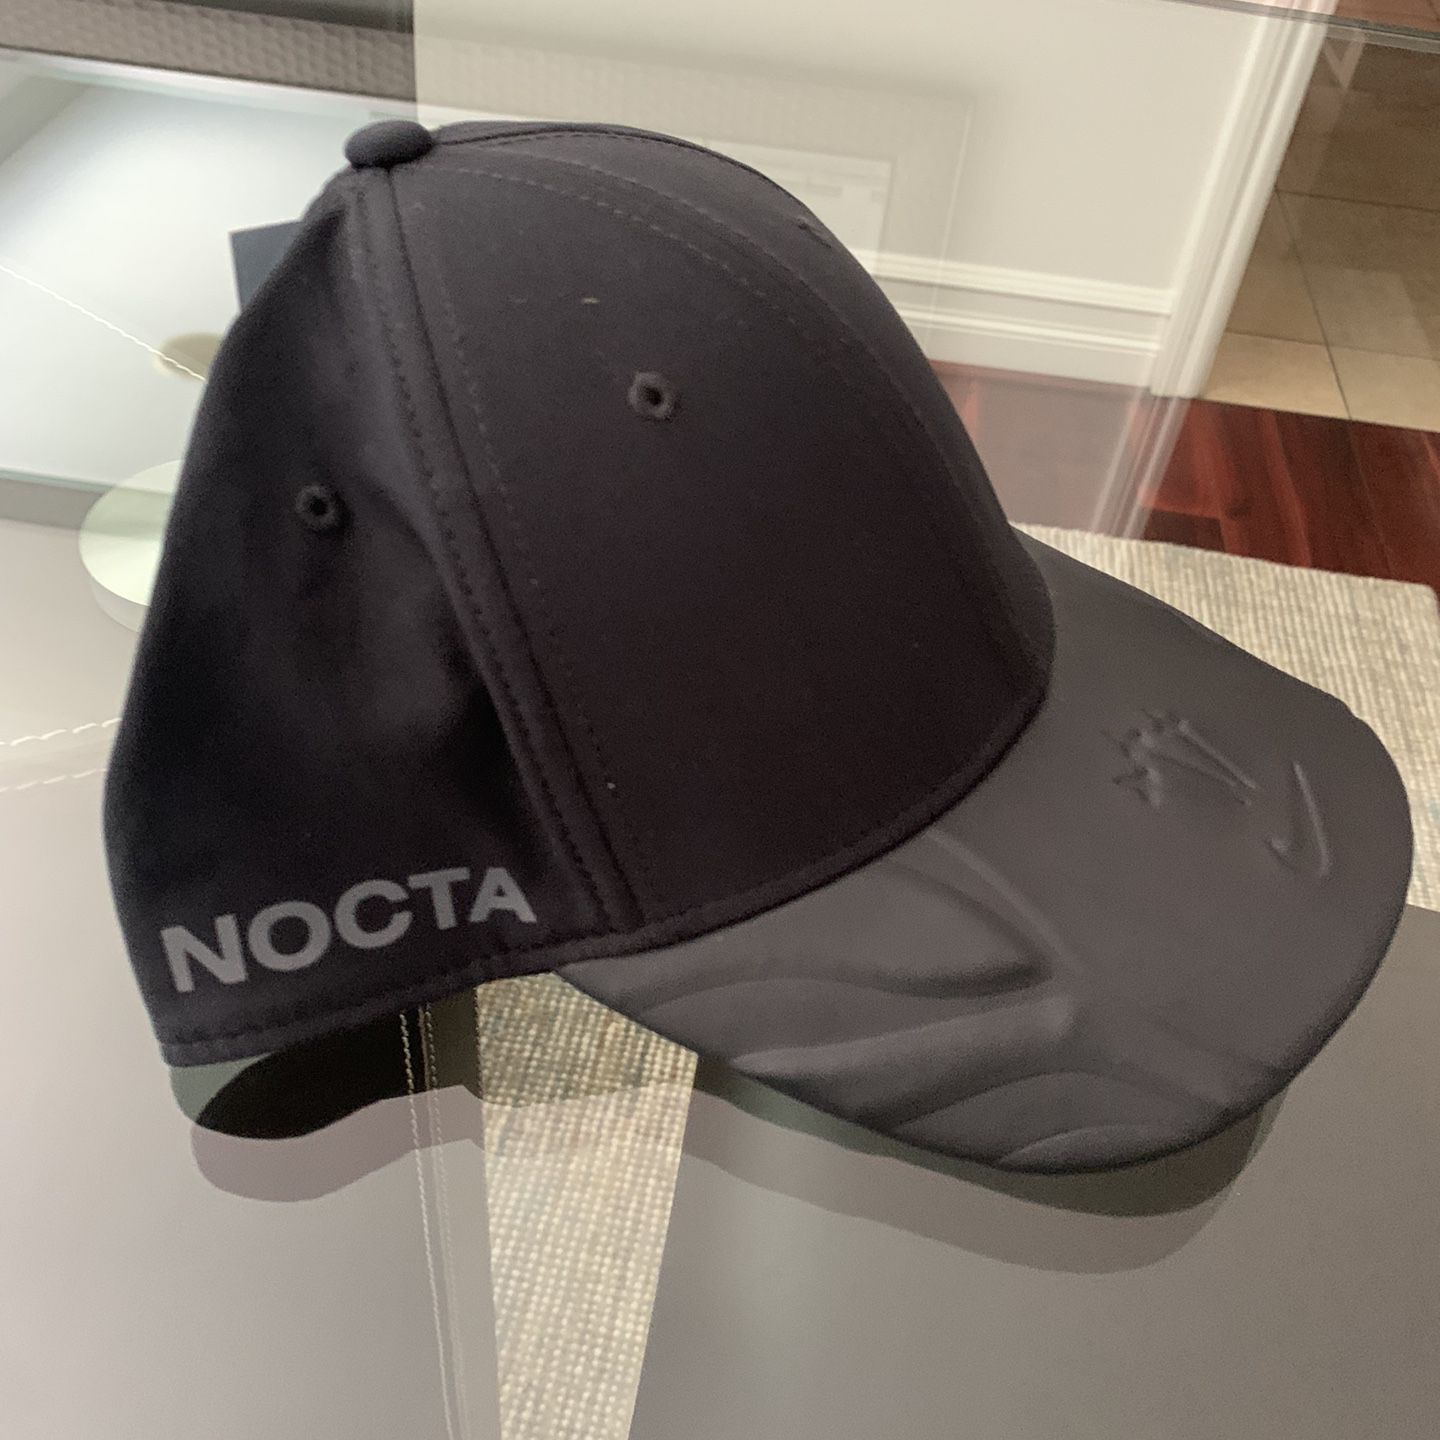 Nike NOCTA black hat